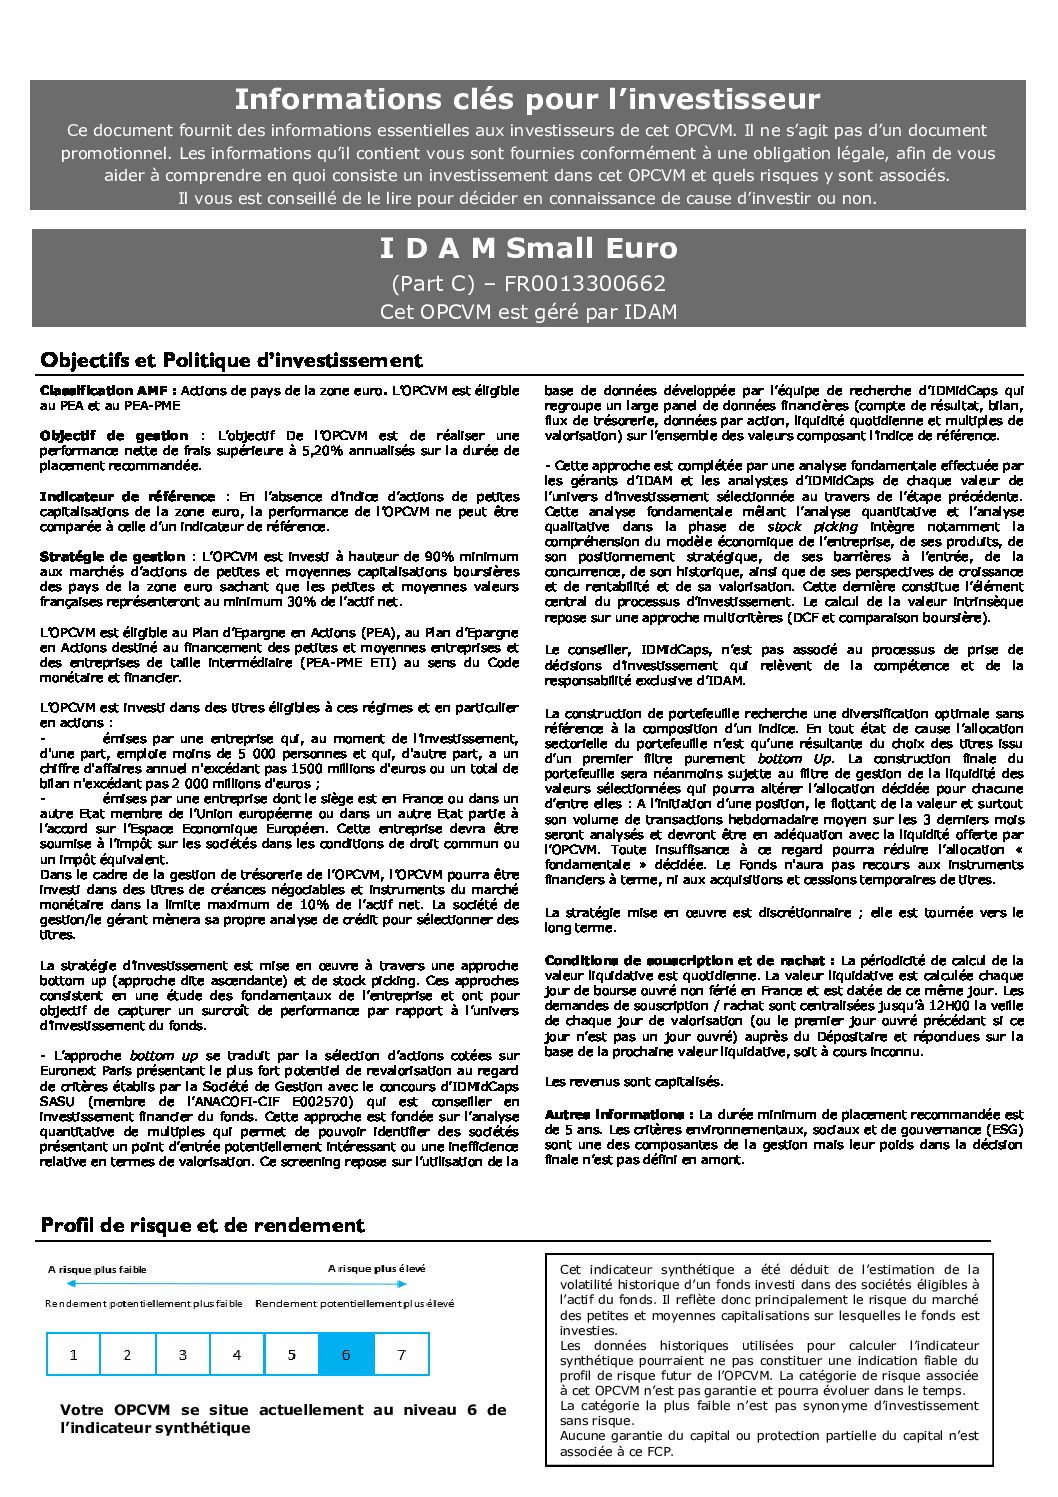 DICI-Part-C-IDAM-SMALL-EURO-3-pdf